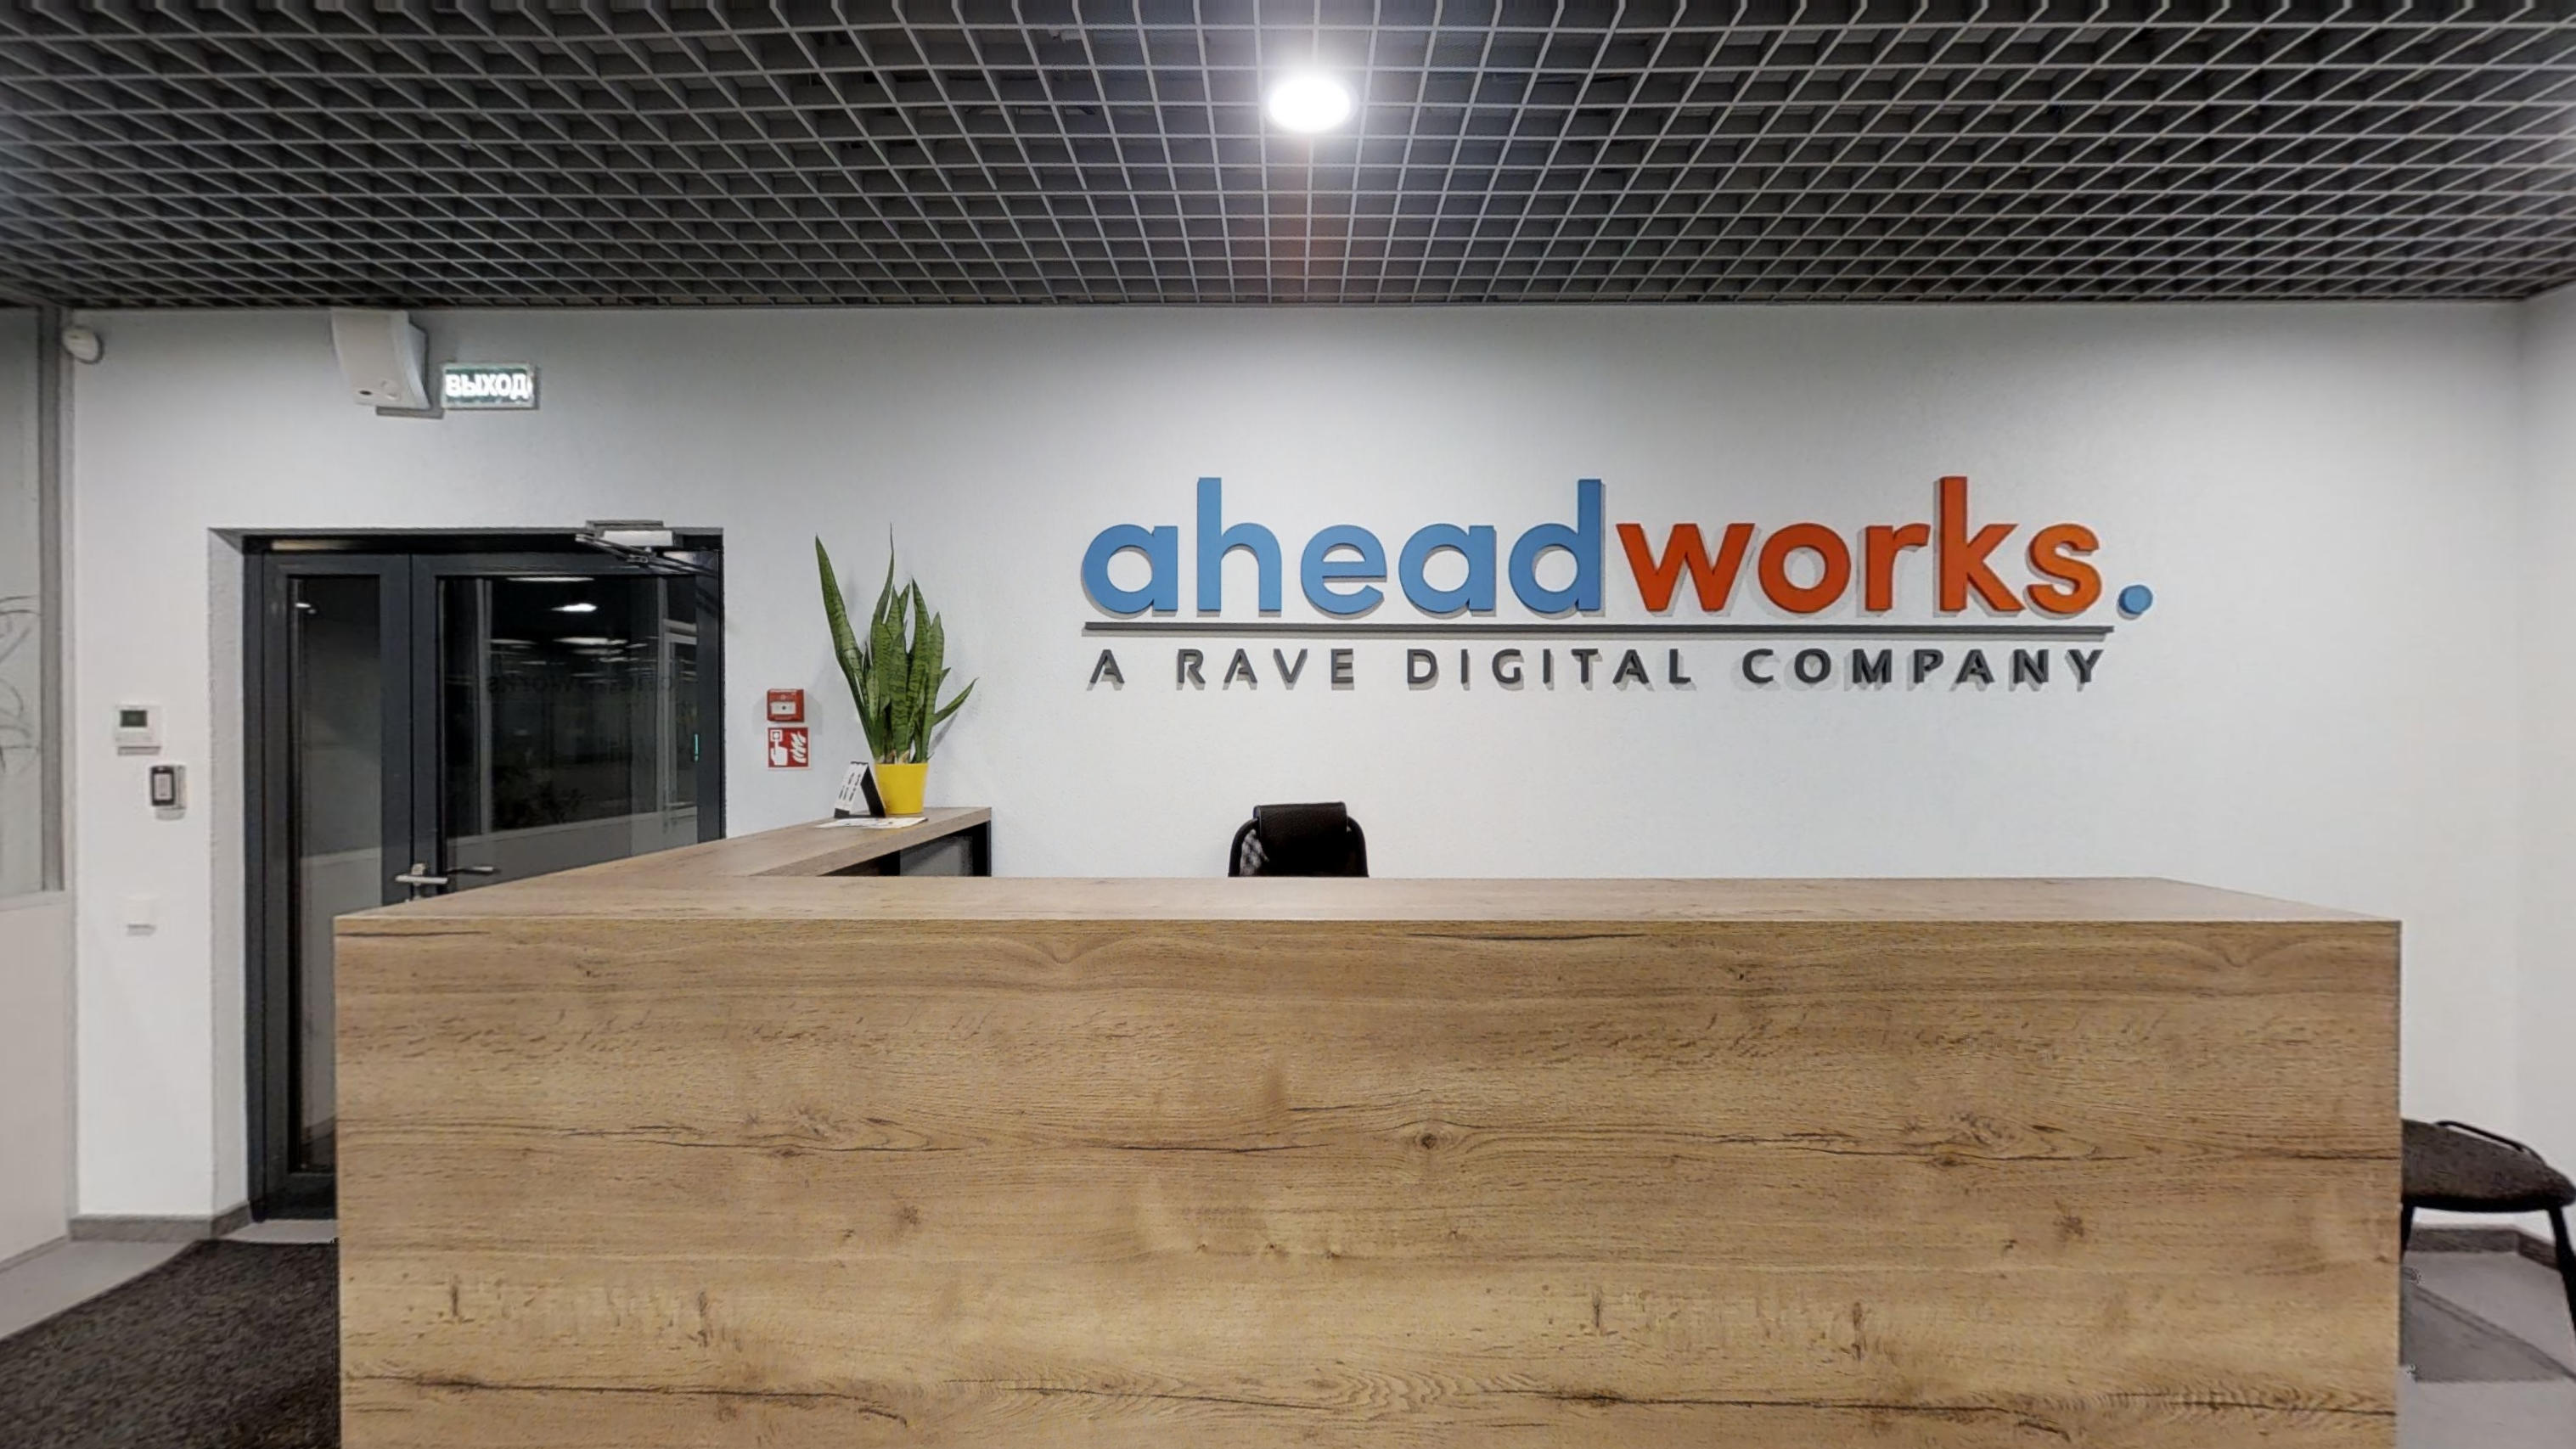 Aheadworks A Rave Digital Compan